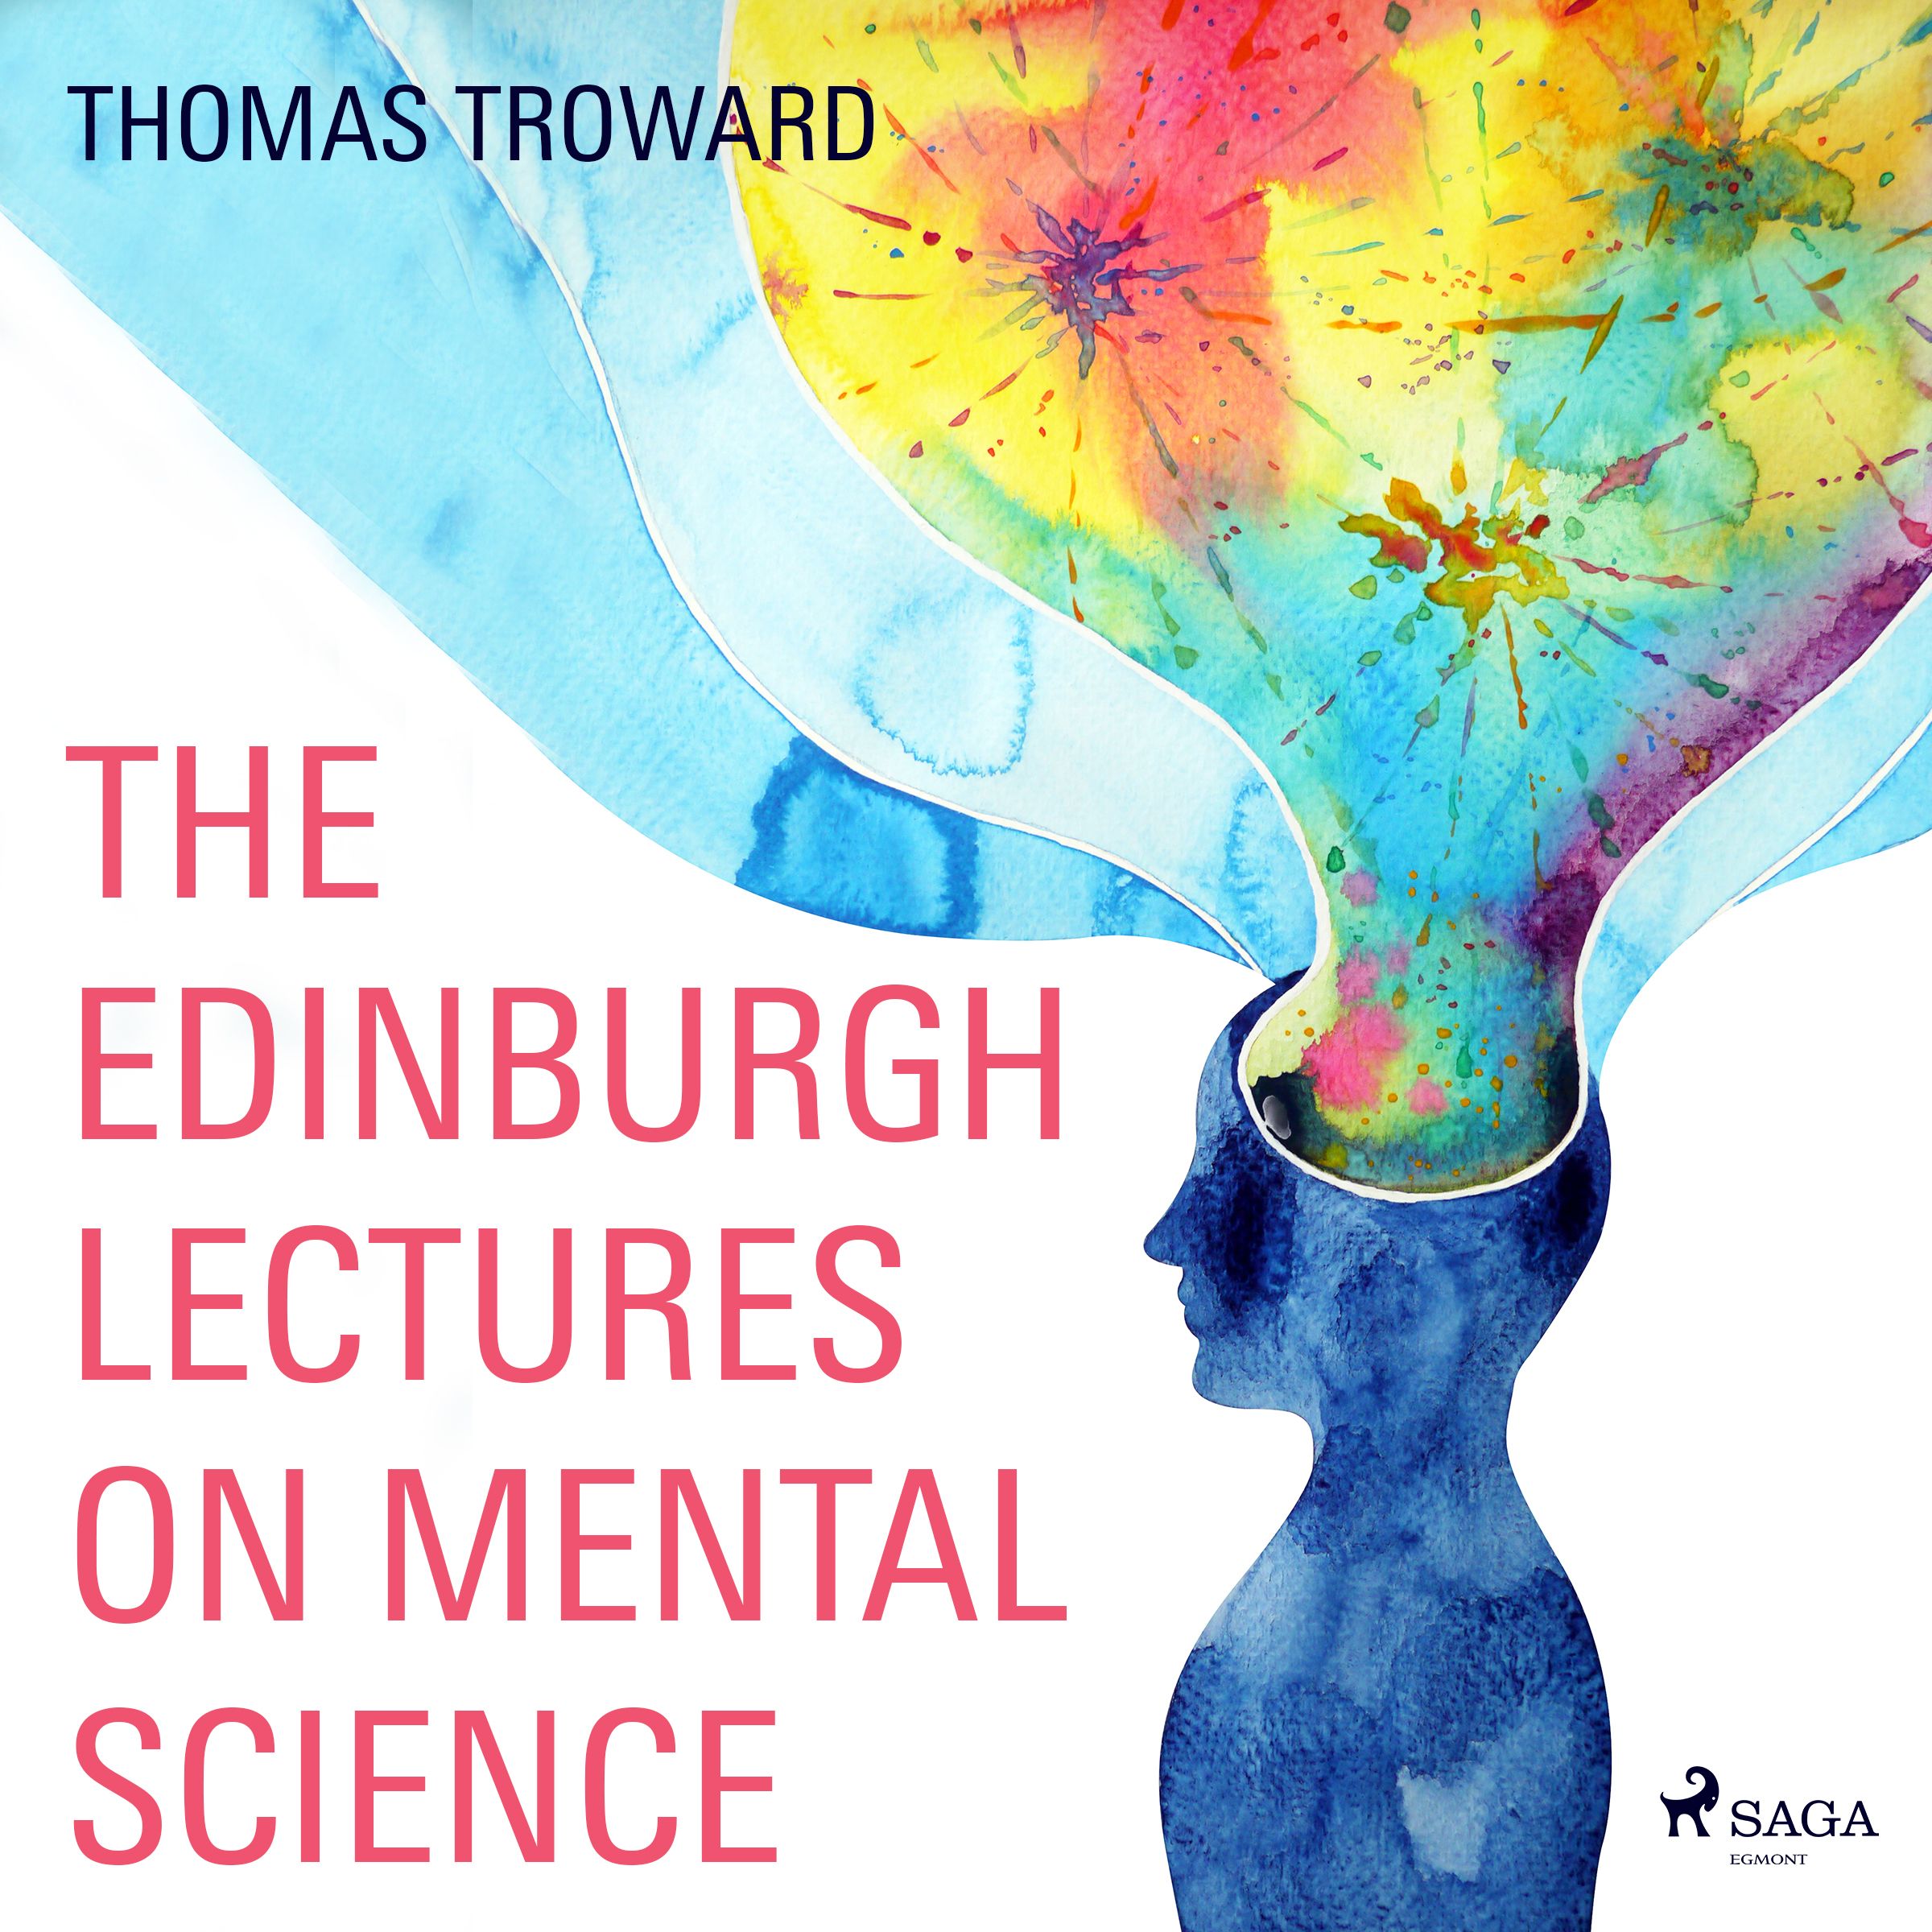 The Edinburgh Lectures on Mental Science, lydbog af Thomas Troward